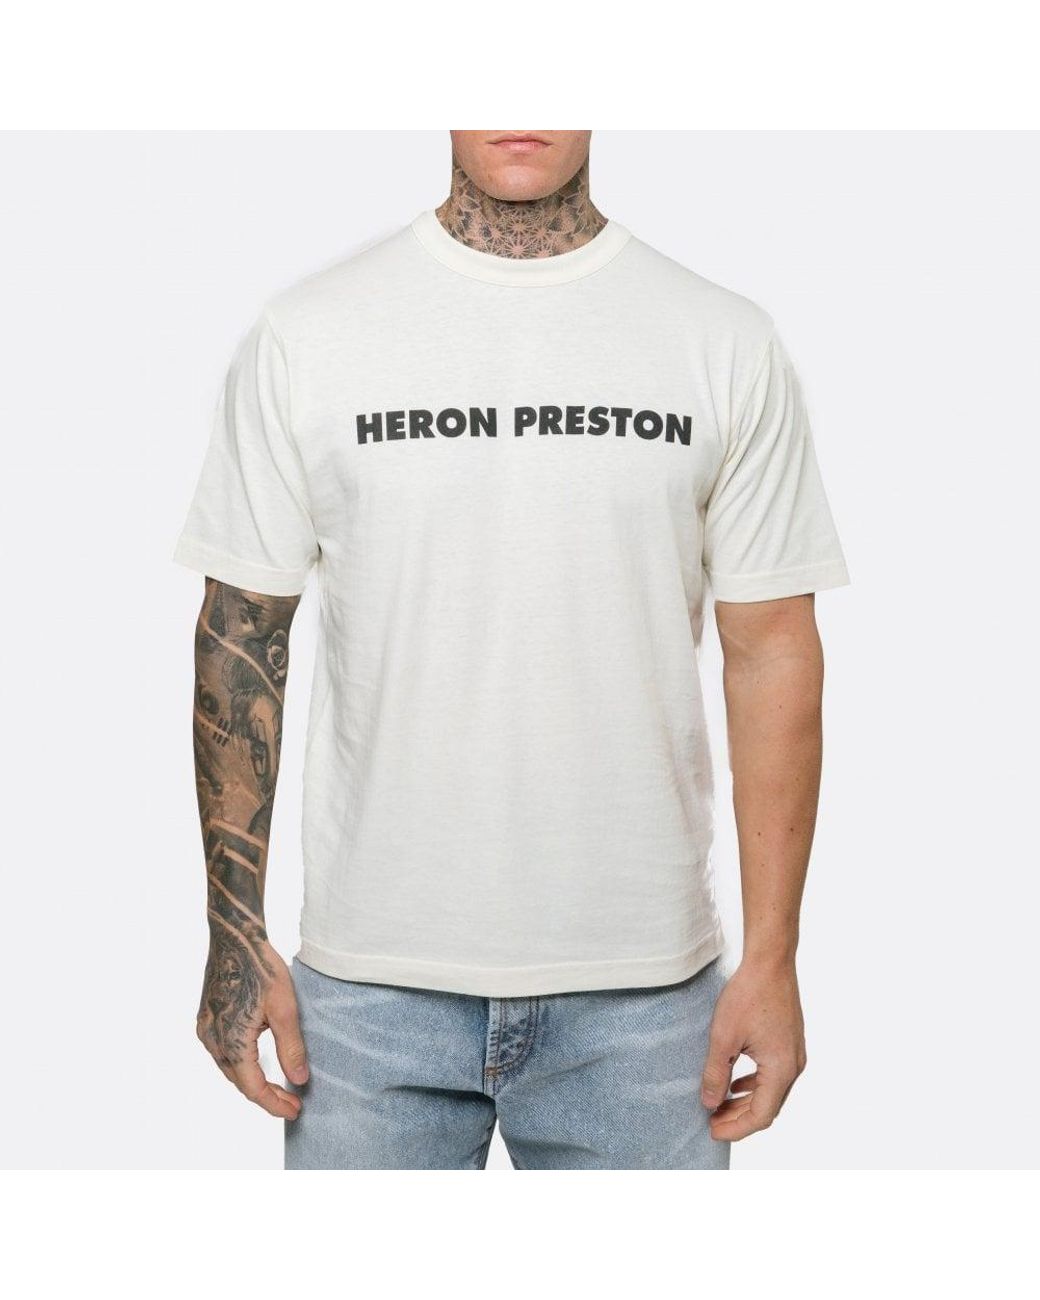 Preston Official Merch: Unleash Your Inner Gamer